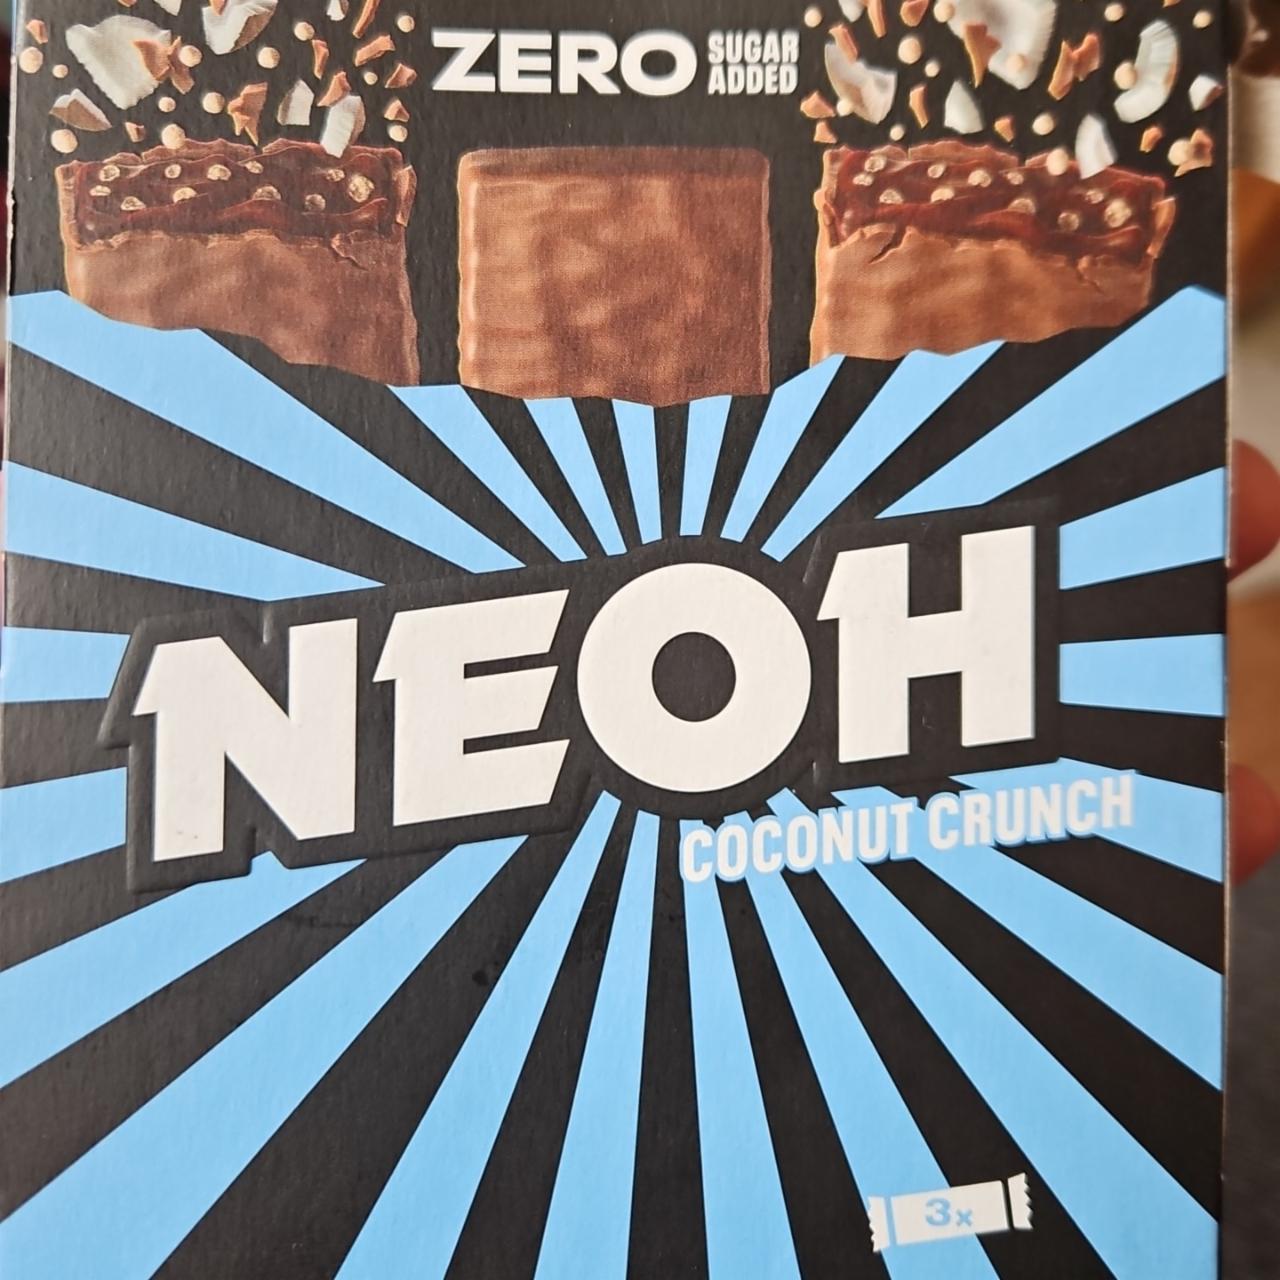 Fotografie - Coconut crunch Neoh Zero sugar